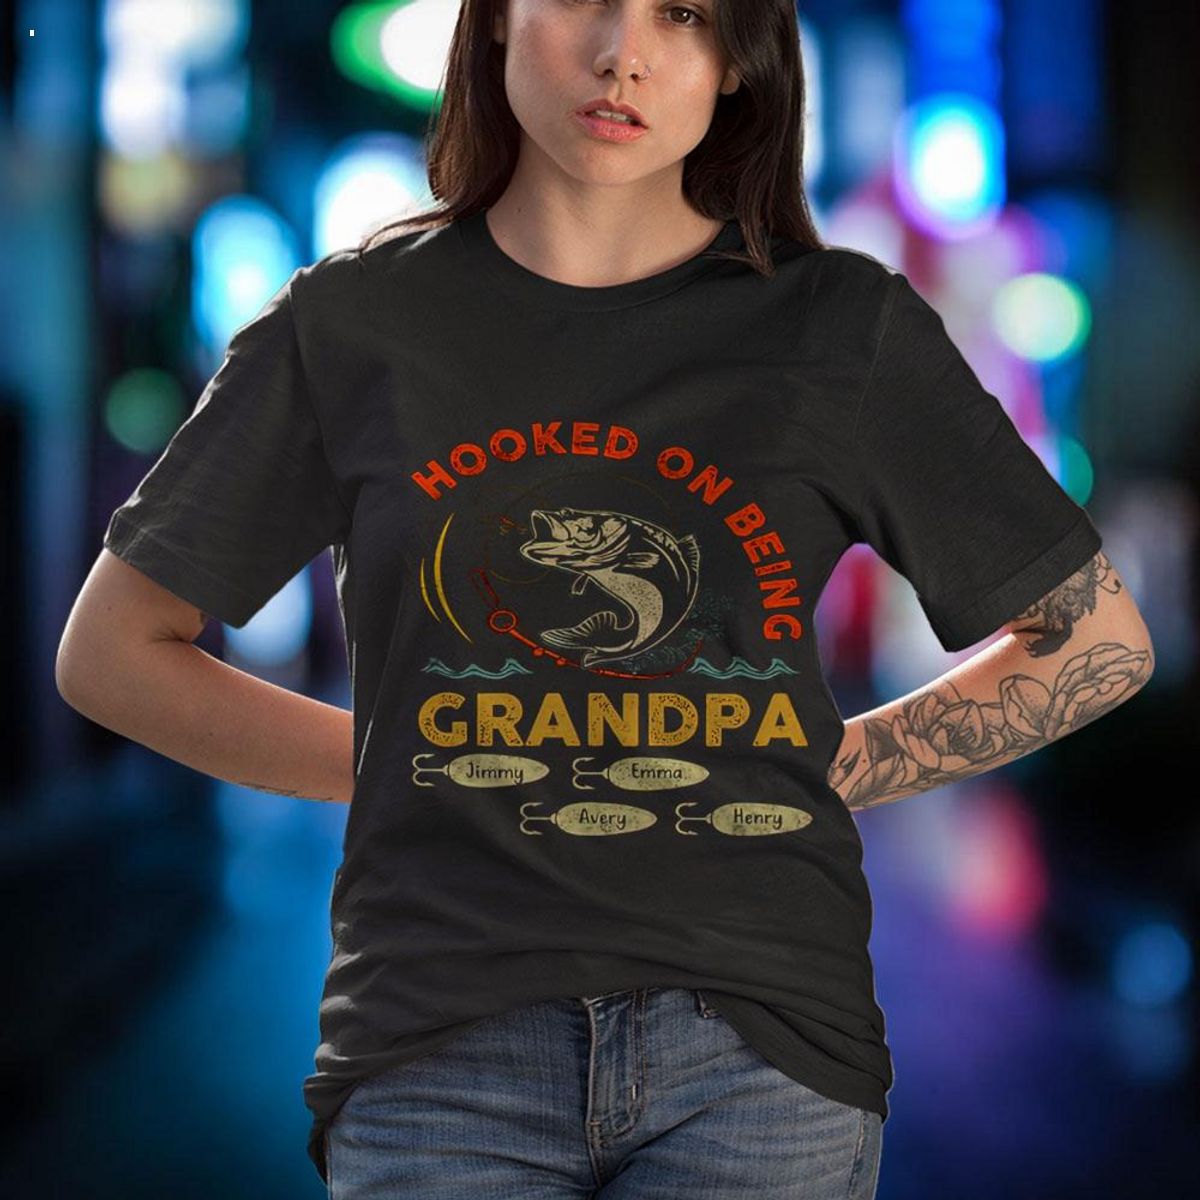 Lovelypod - Hooked On Being Grandpa Shirt